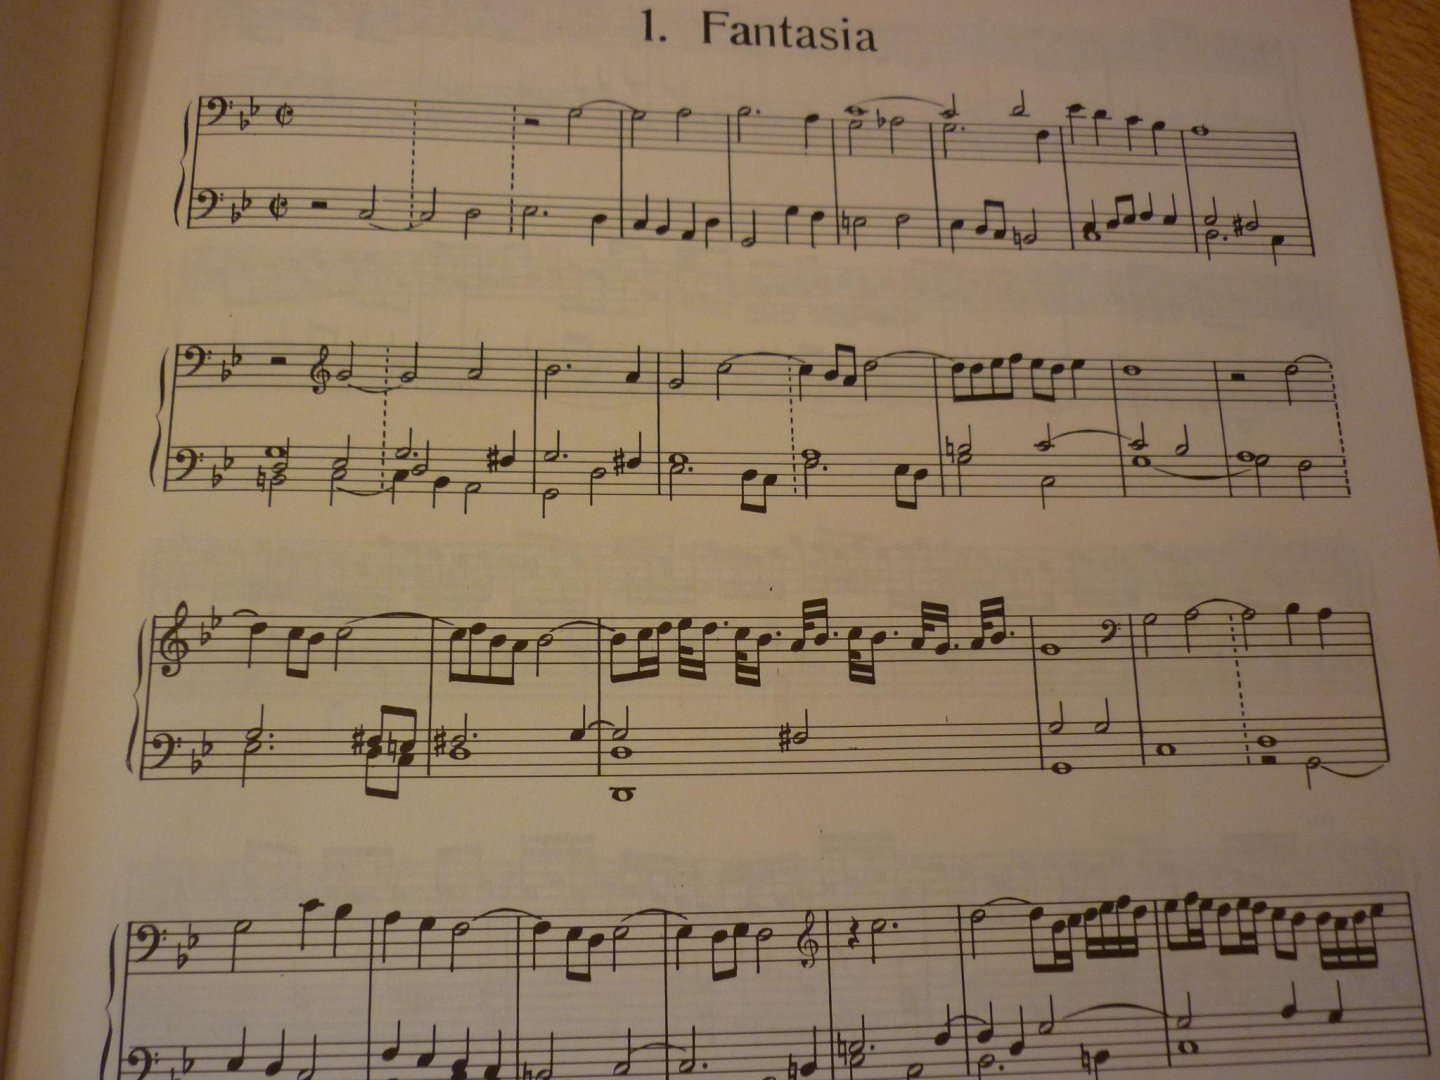 Kerckhoven; Abraham van den (1618 - 1701) - 5 Fantasias, versus 1mi toni, 2 Fugas; Incognita Organo - Deel 32